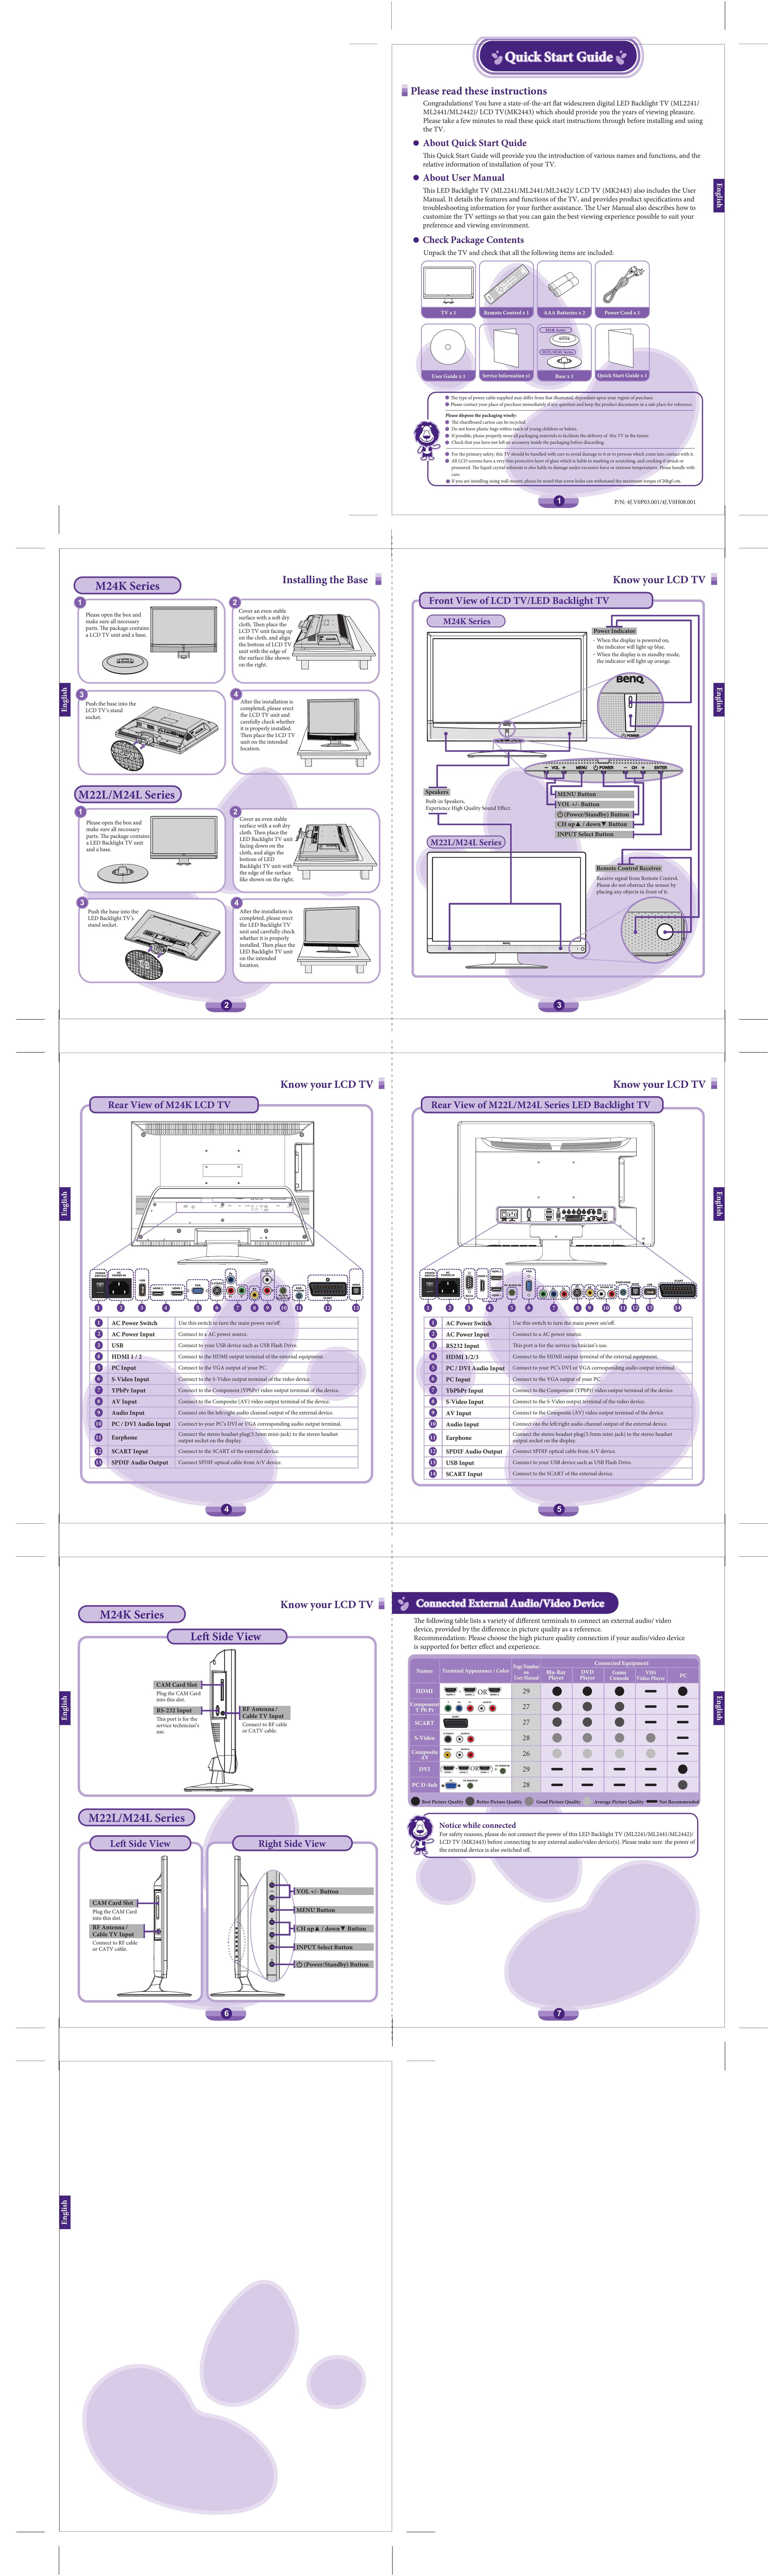 BenQ ML2442 Flat Panel Television User Manual